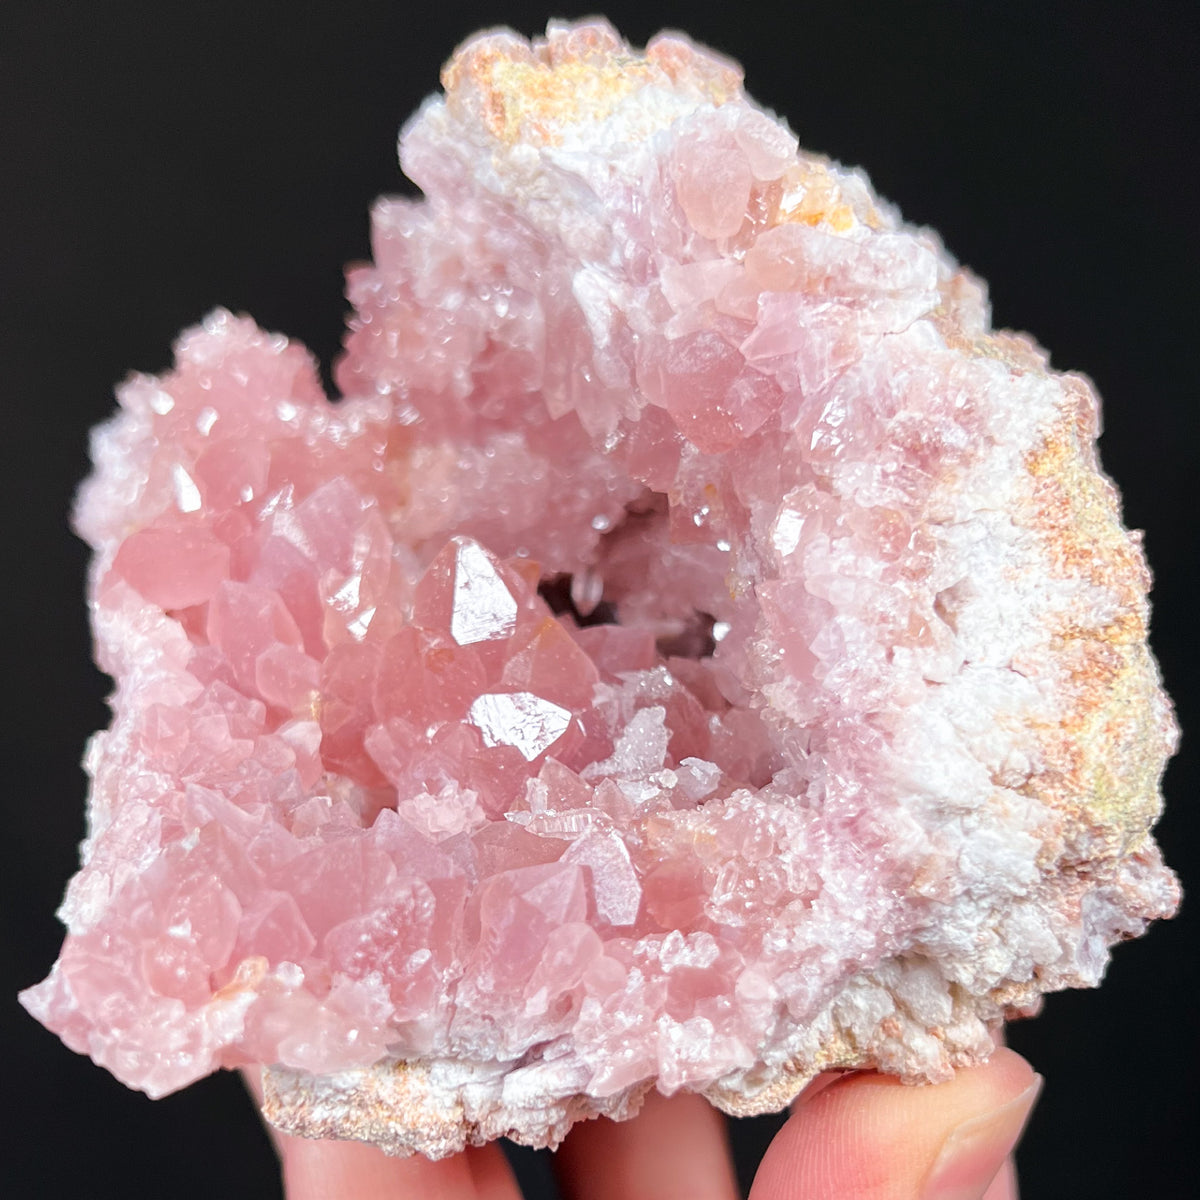 Pink Amethyst Crystals inside a Geode